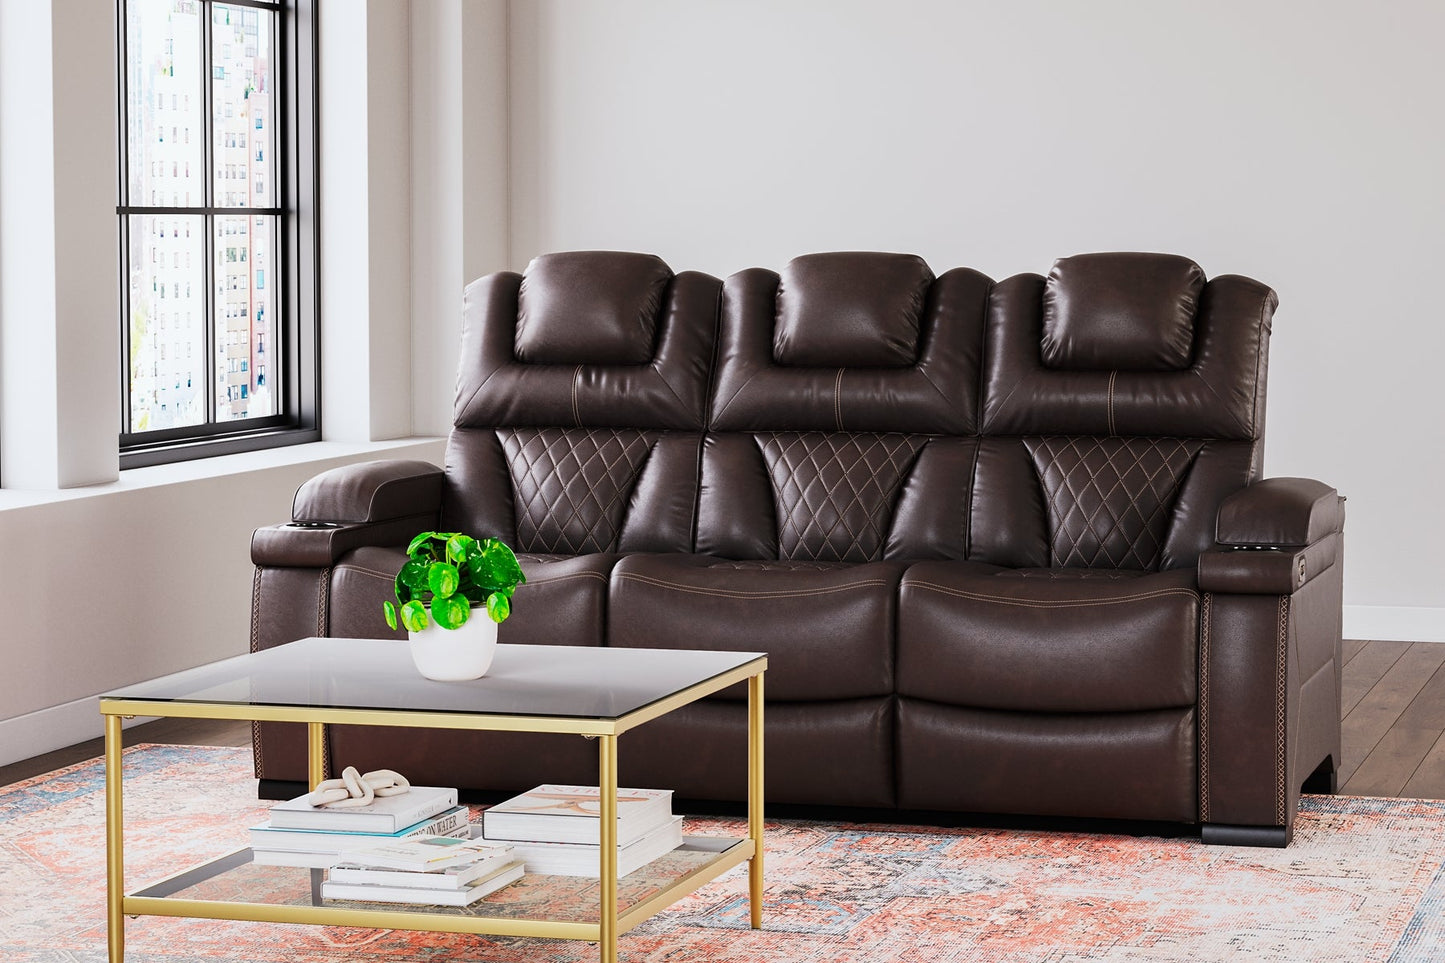 Warnerton PWR REC Sofa with ADJ Headrest at Cloud 9 Mattress & Furniture furniture, home furnishing, home decor